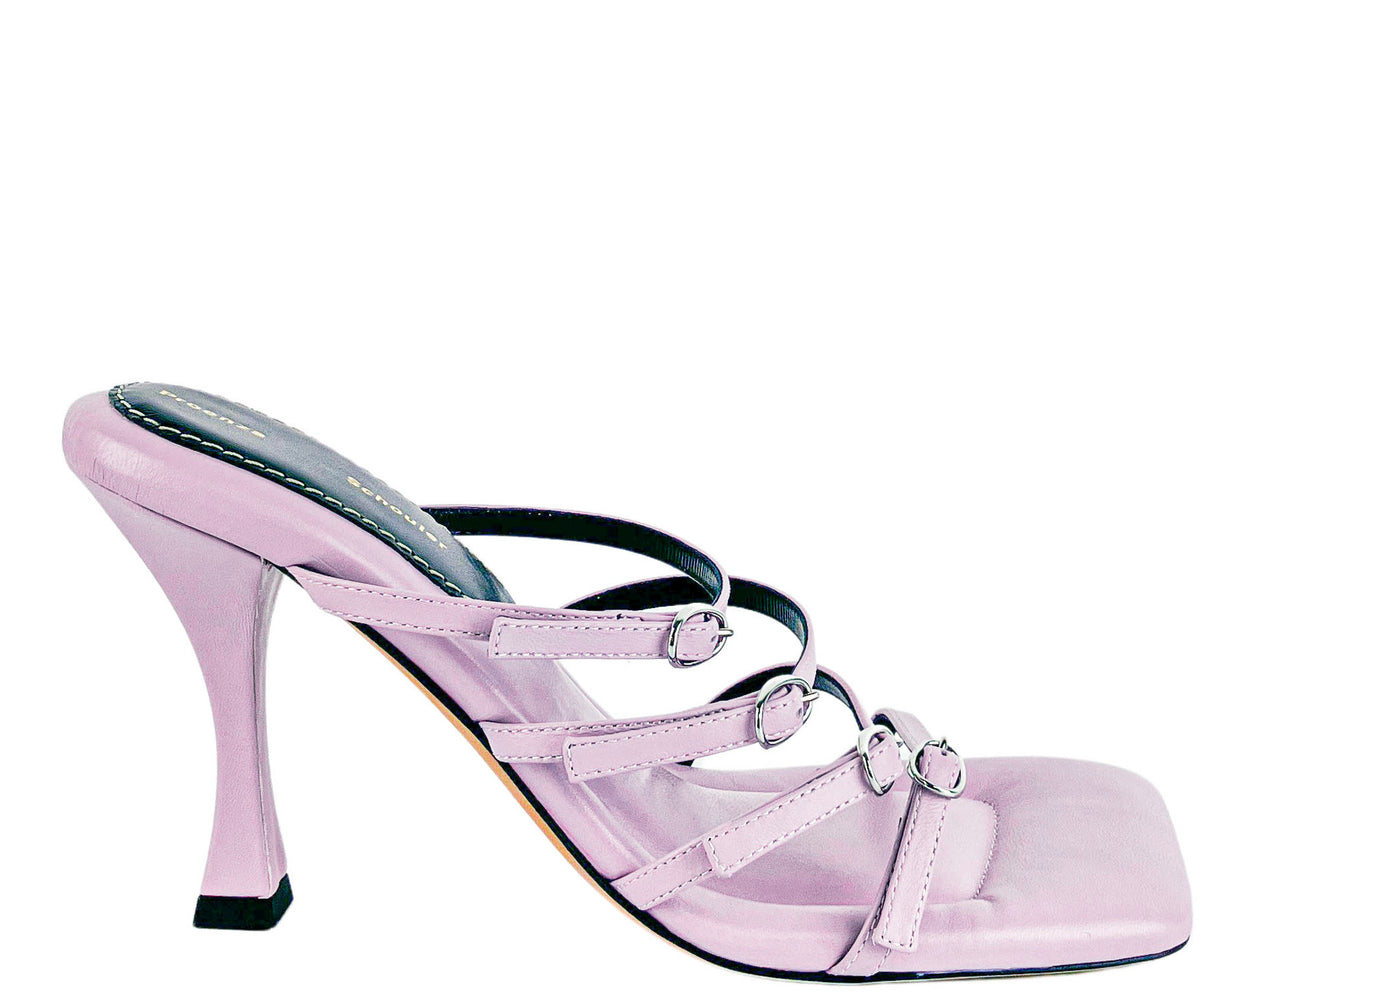 Proenza Schouler Strappy Heels in Lavender - Discounts on Proenza Schouler at UAL